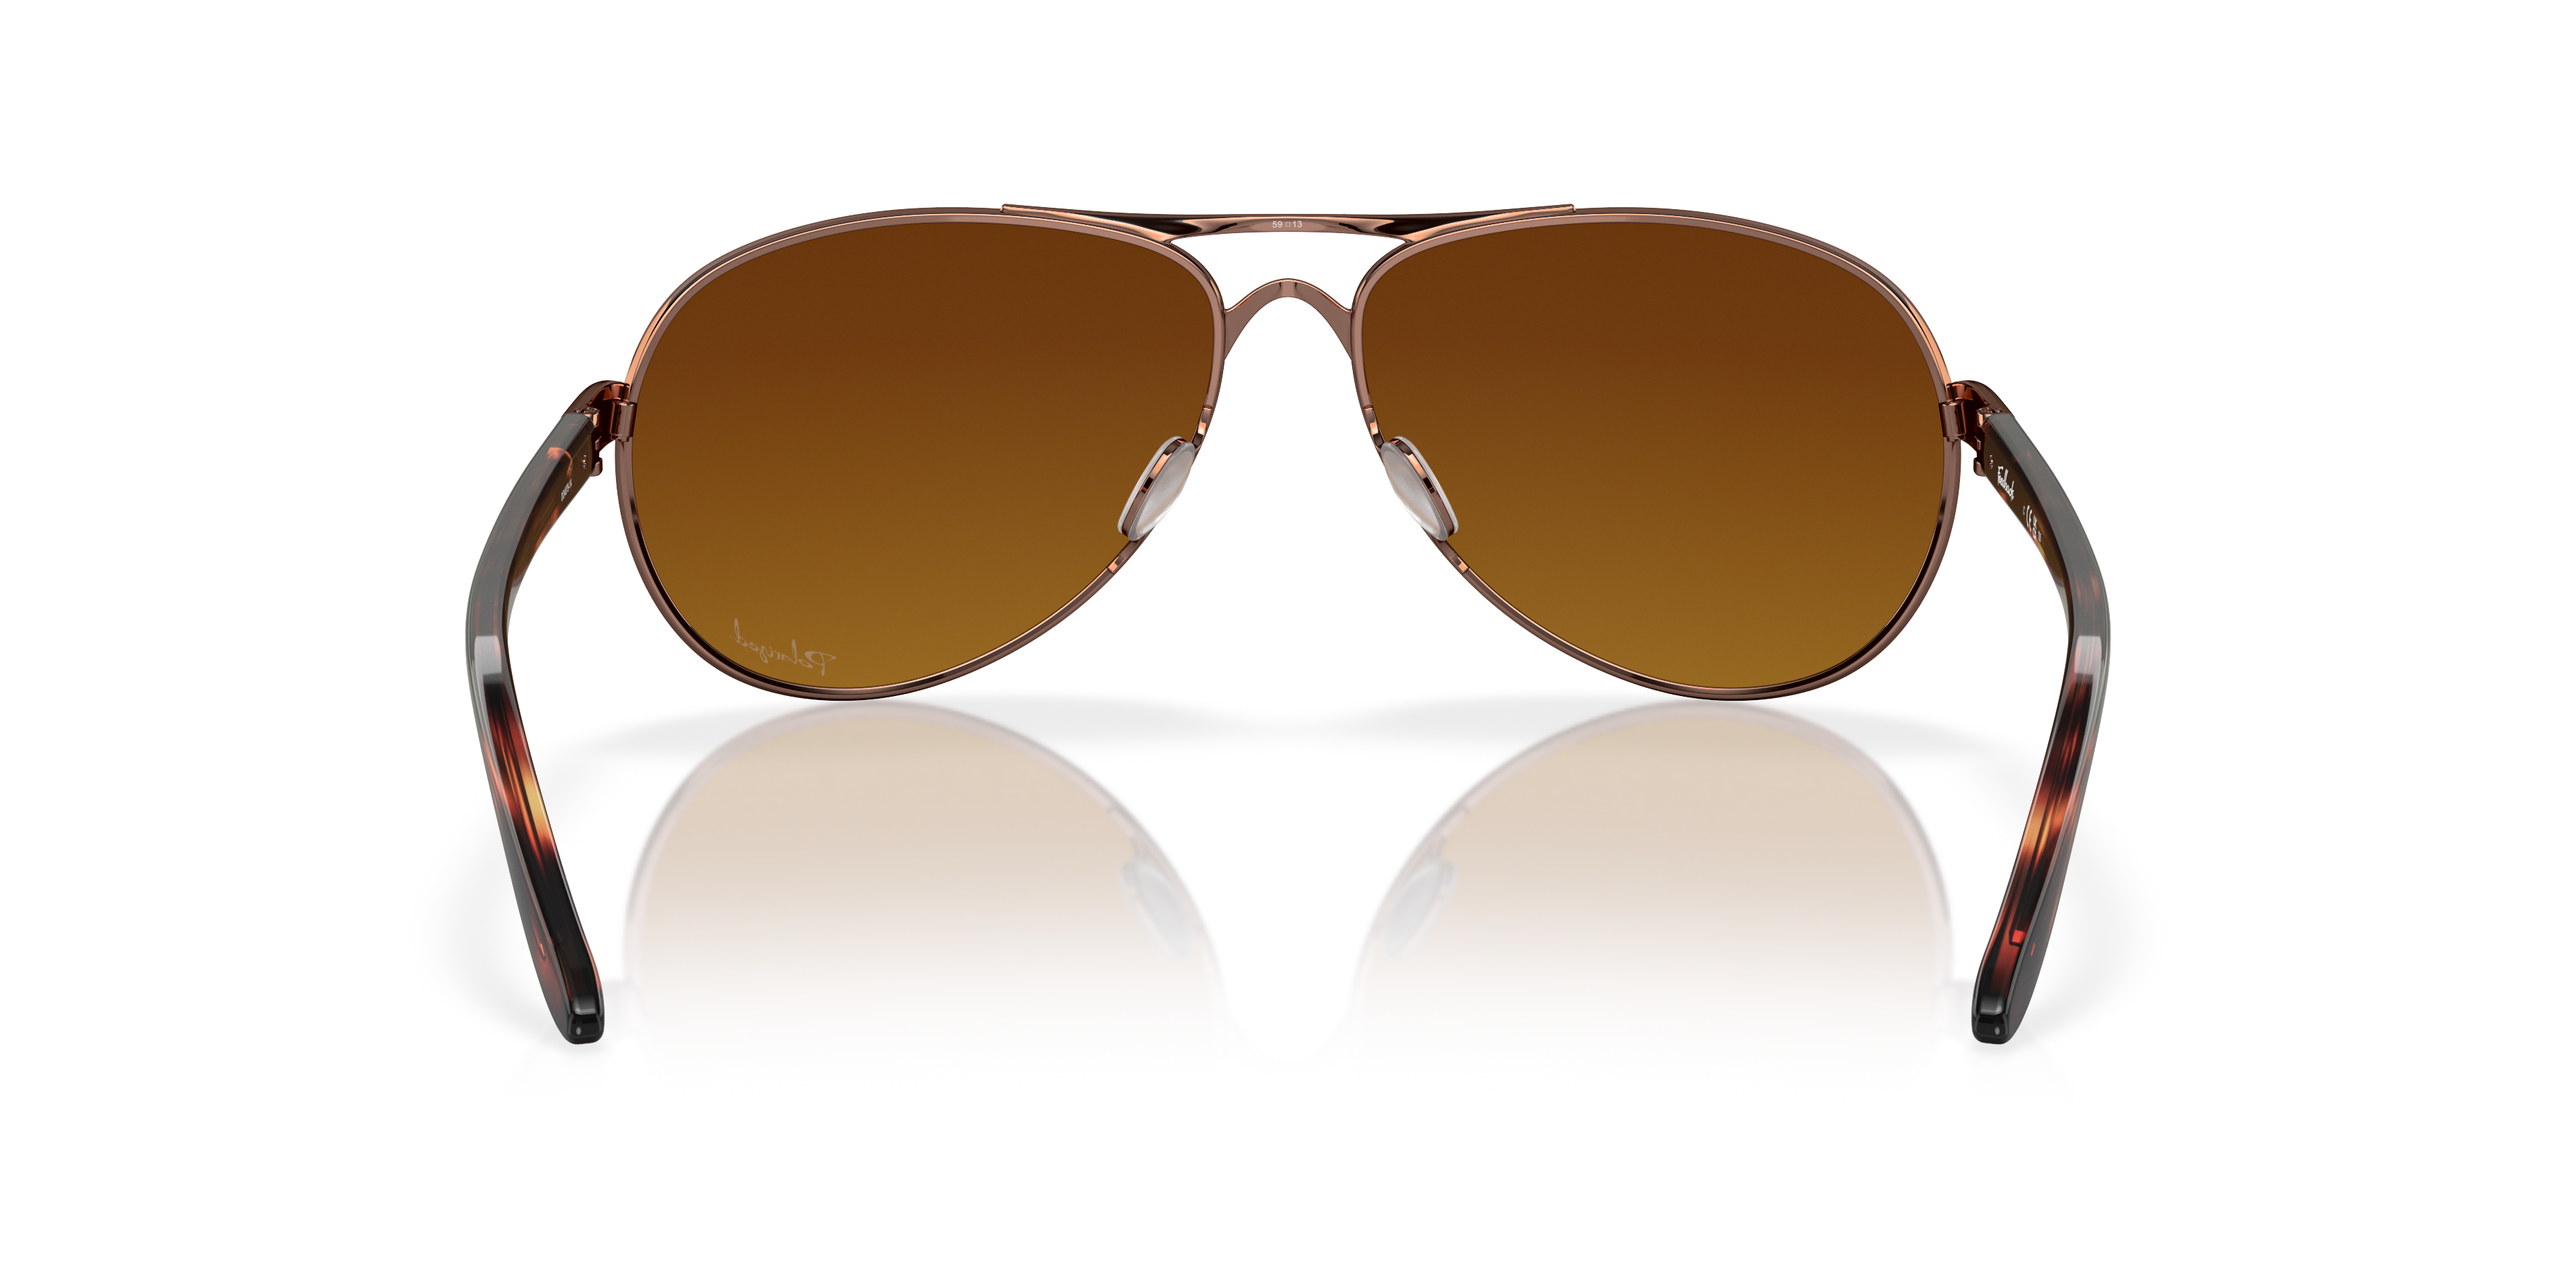 Oakley Vacancy Sunglasses Mother Of Pearl/VR50 Brown Gradient Lens -  Reviews, Comparisons, Specs - Glasses - Vital MTB